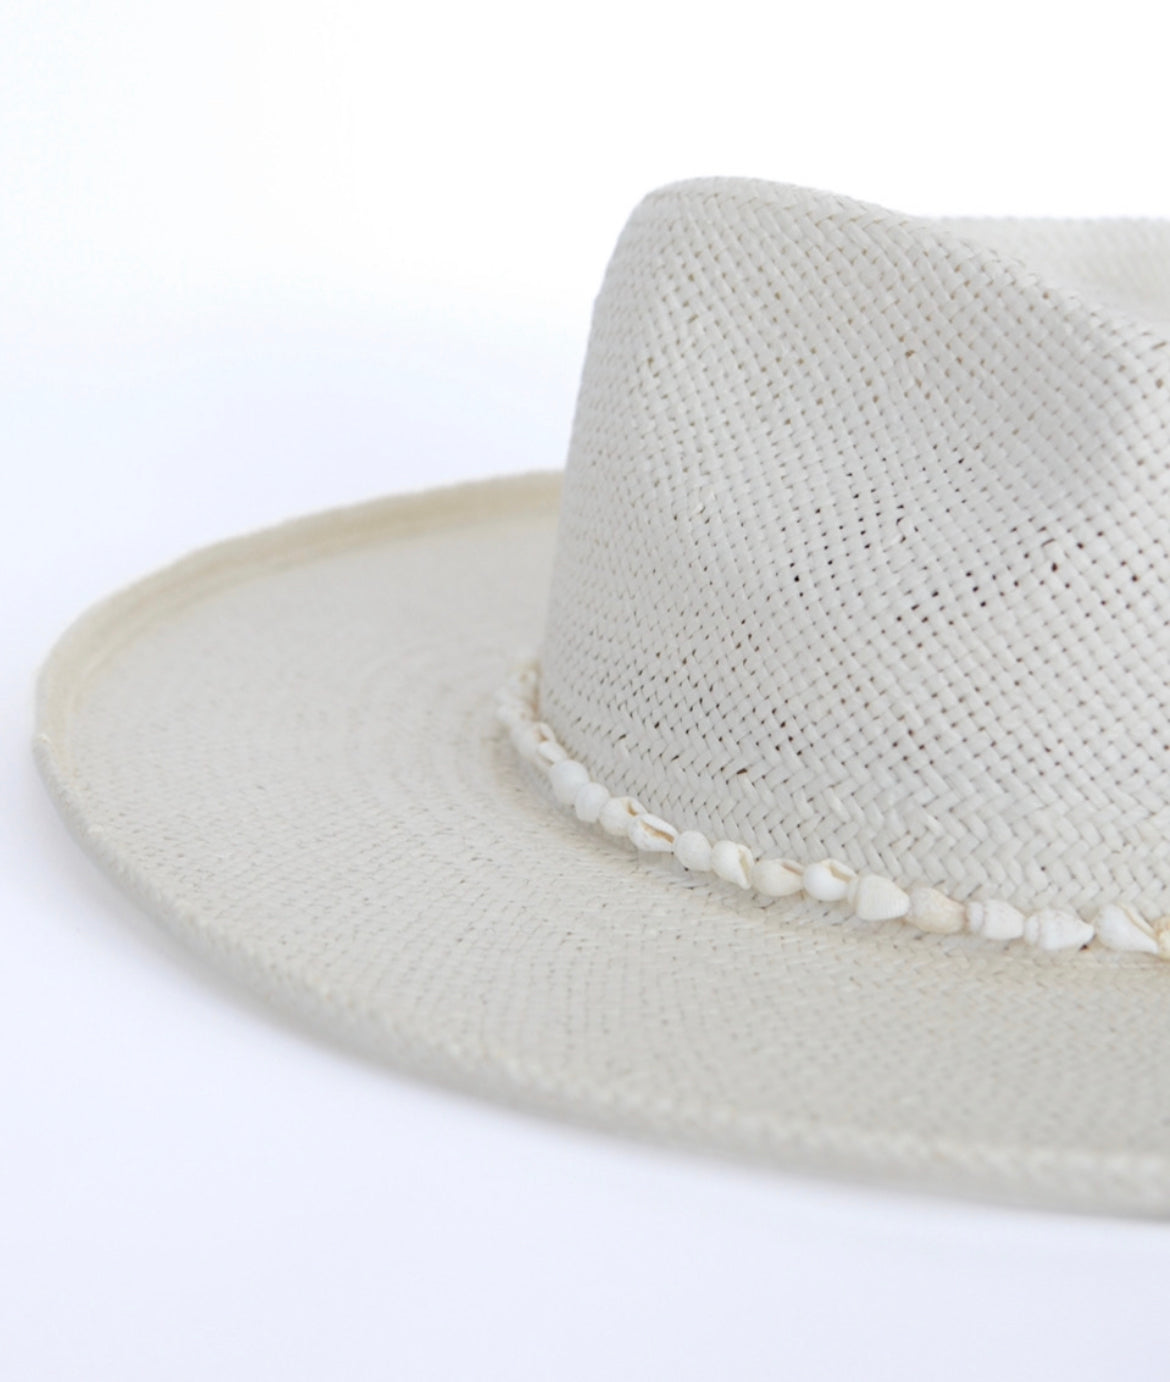 seashell straw beach hat, shell sun hat, white straw hat